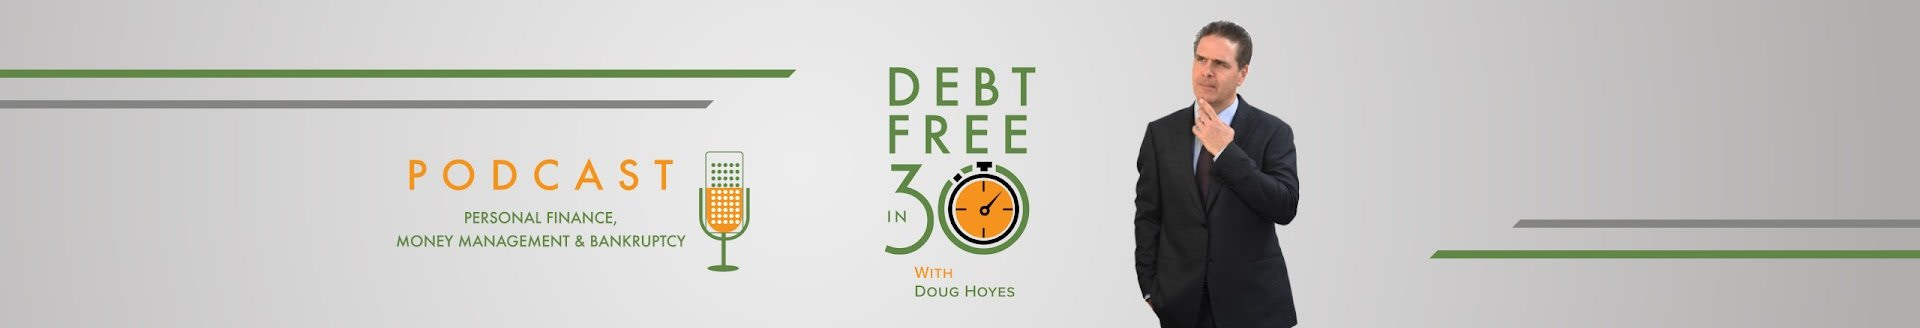 Debt Free in 30 channel banner